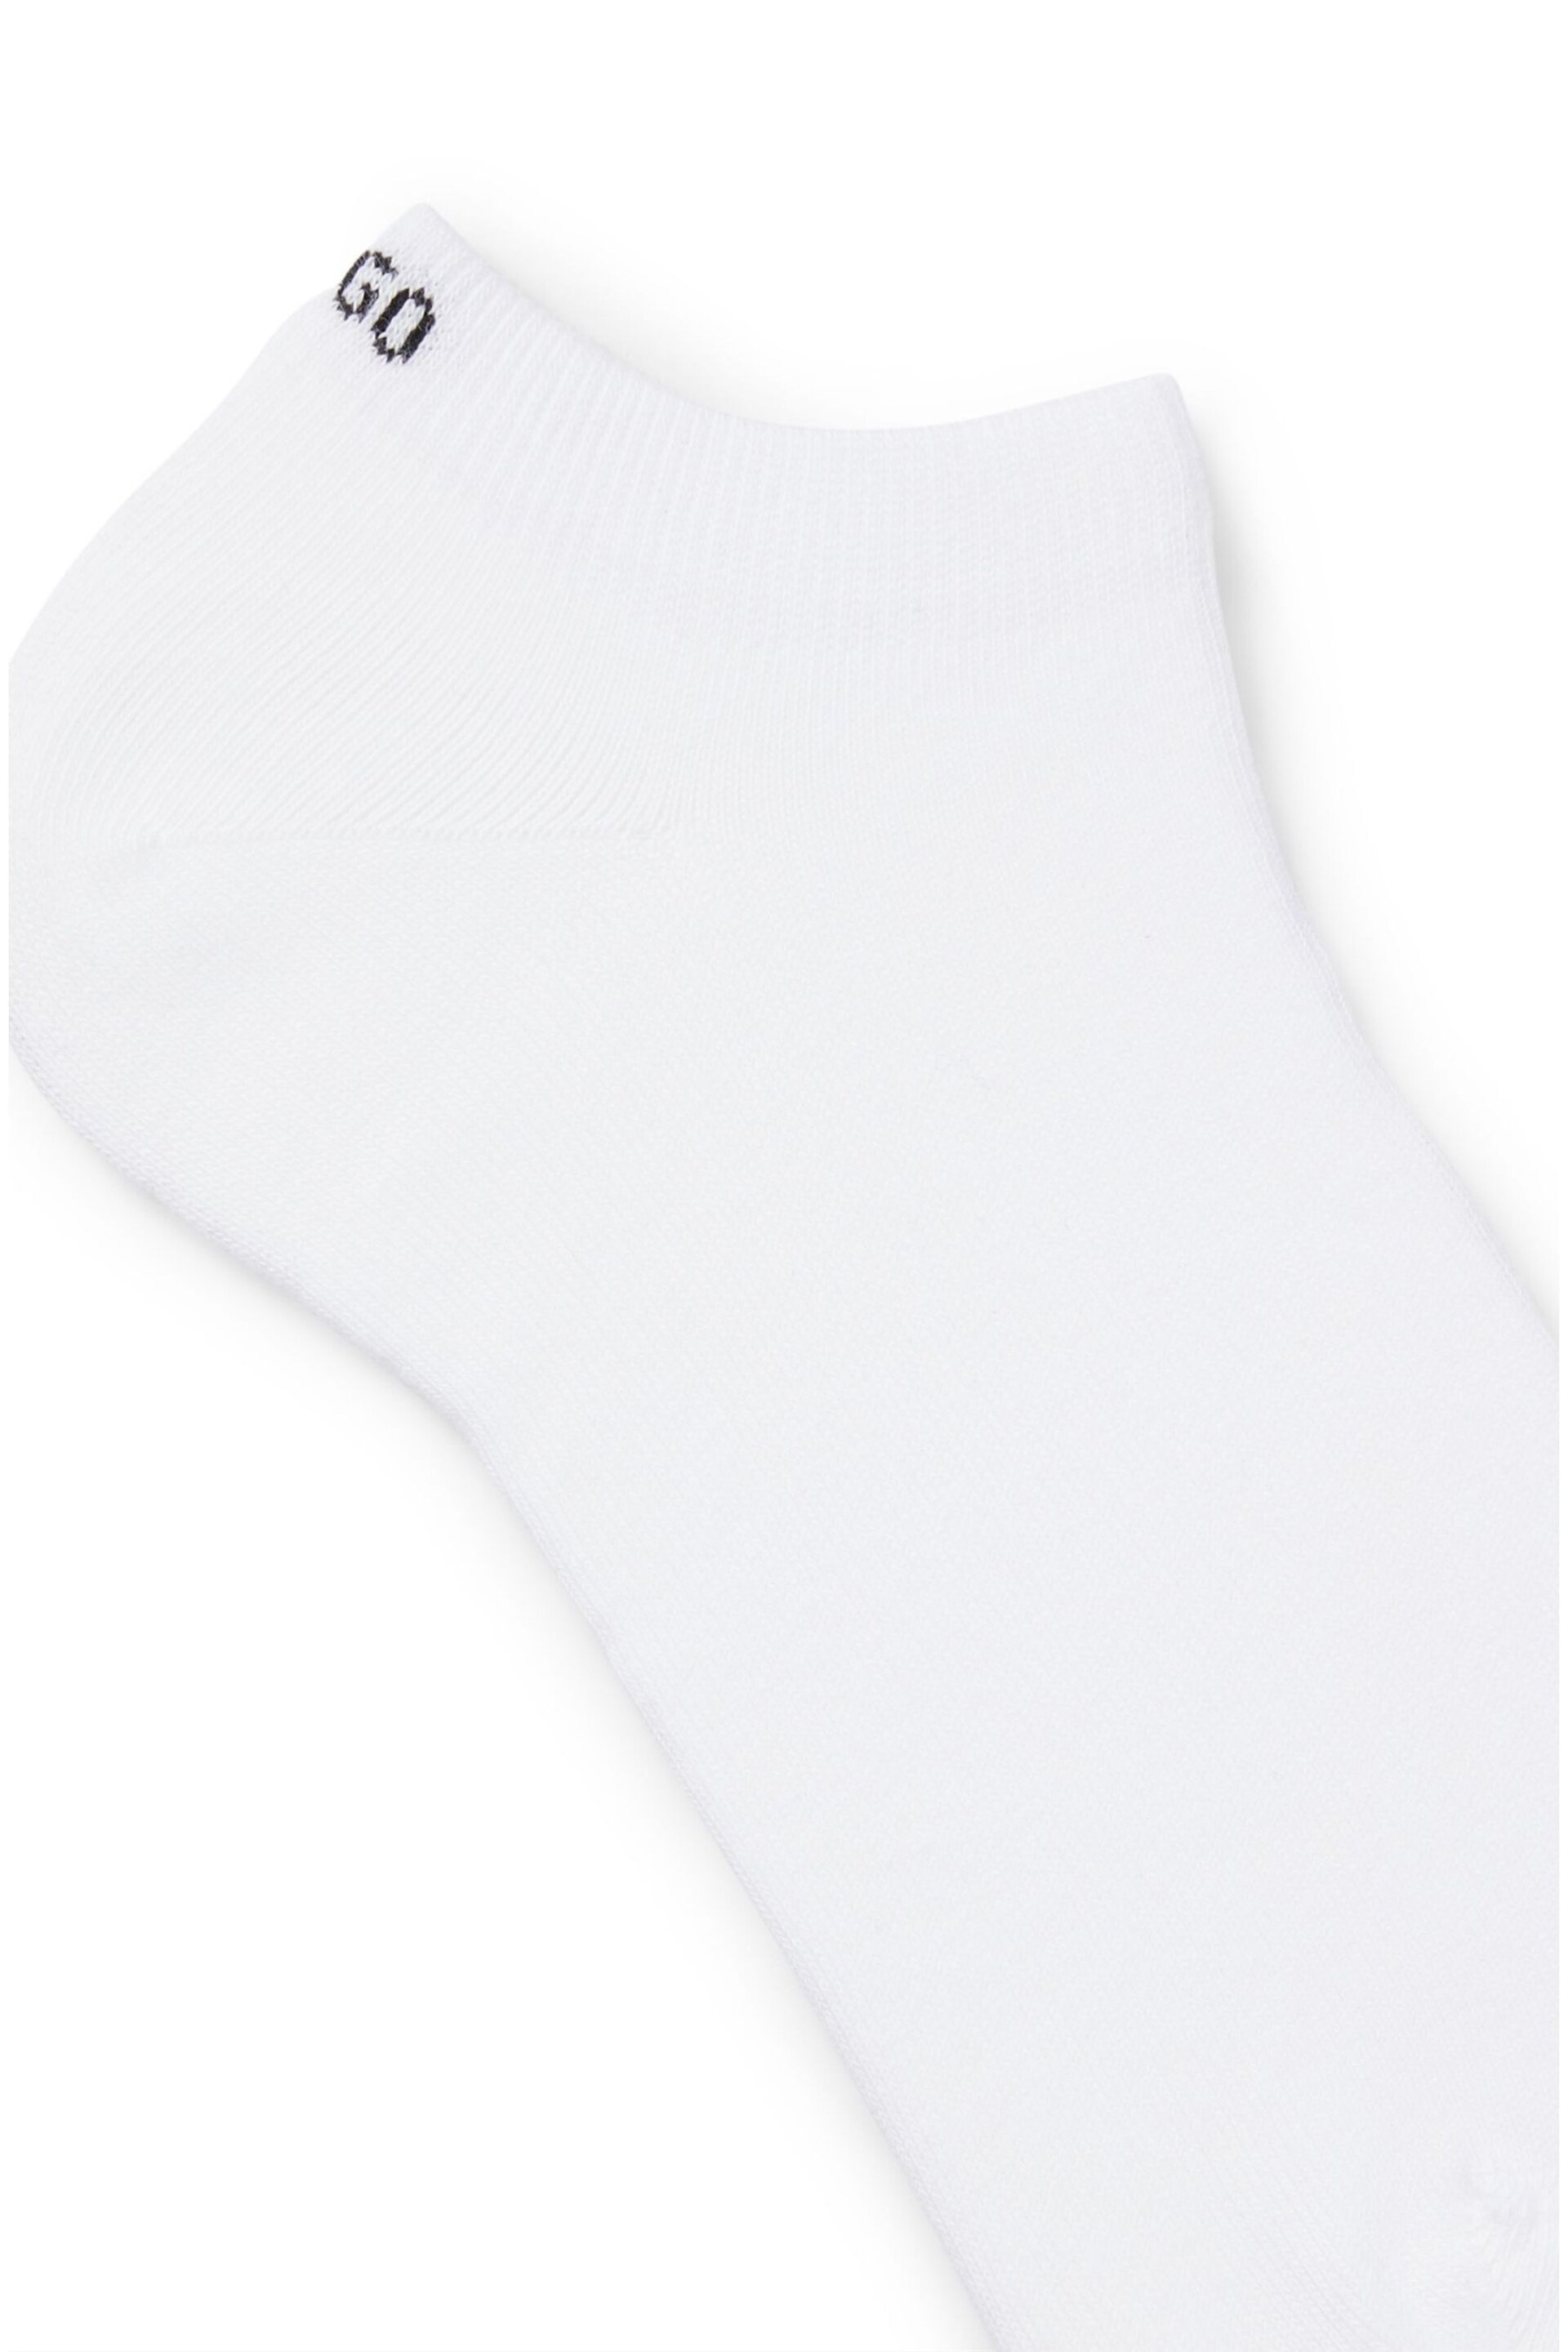 HUGO Logo Ankle Socks 6 Pack - Image 3 of 3